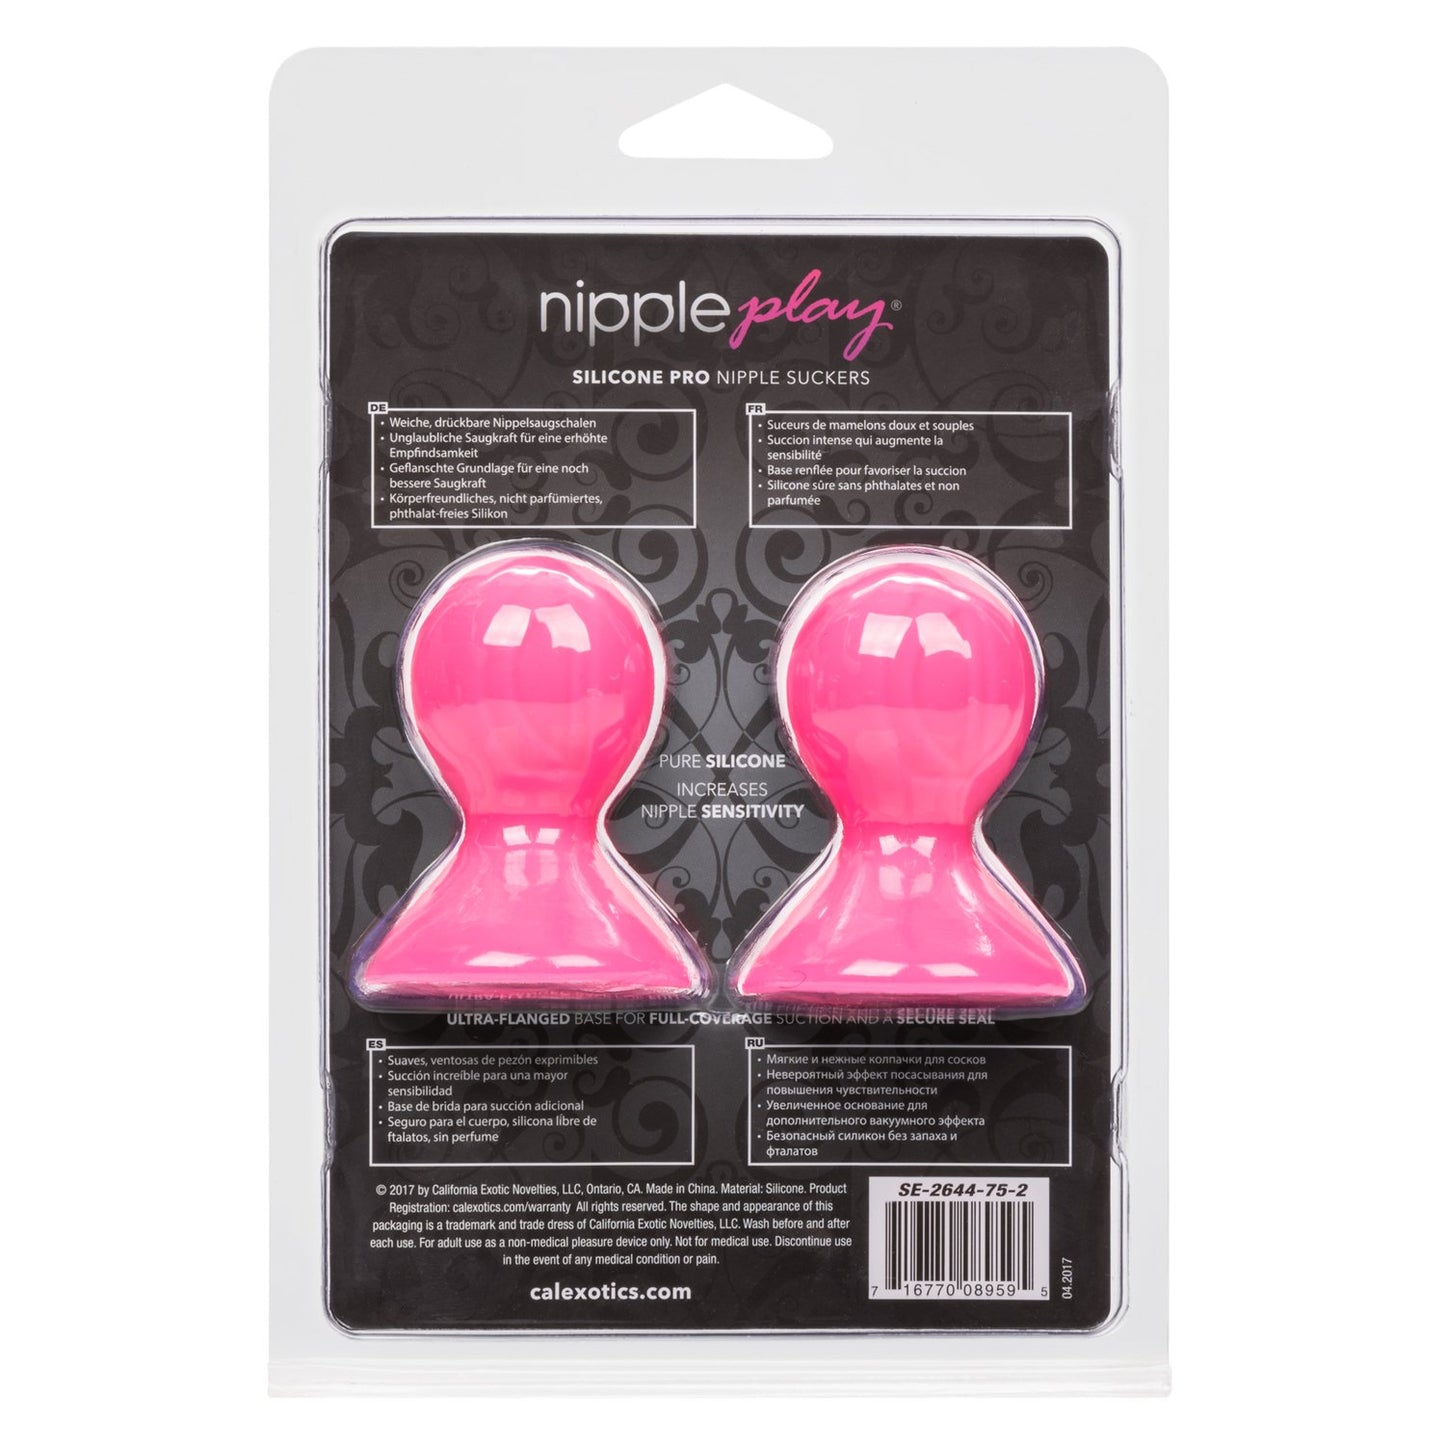 Nipple Play Silicone Pro Nipple Suckers